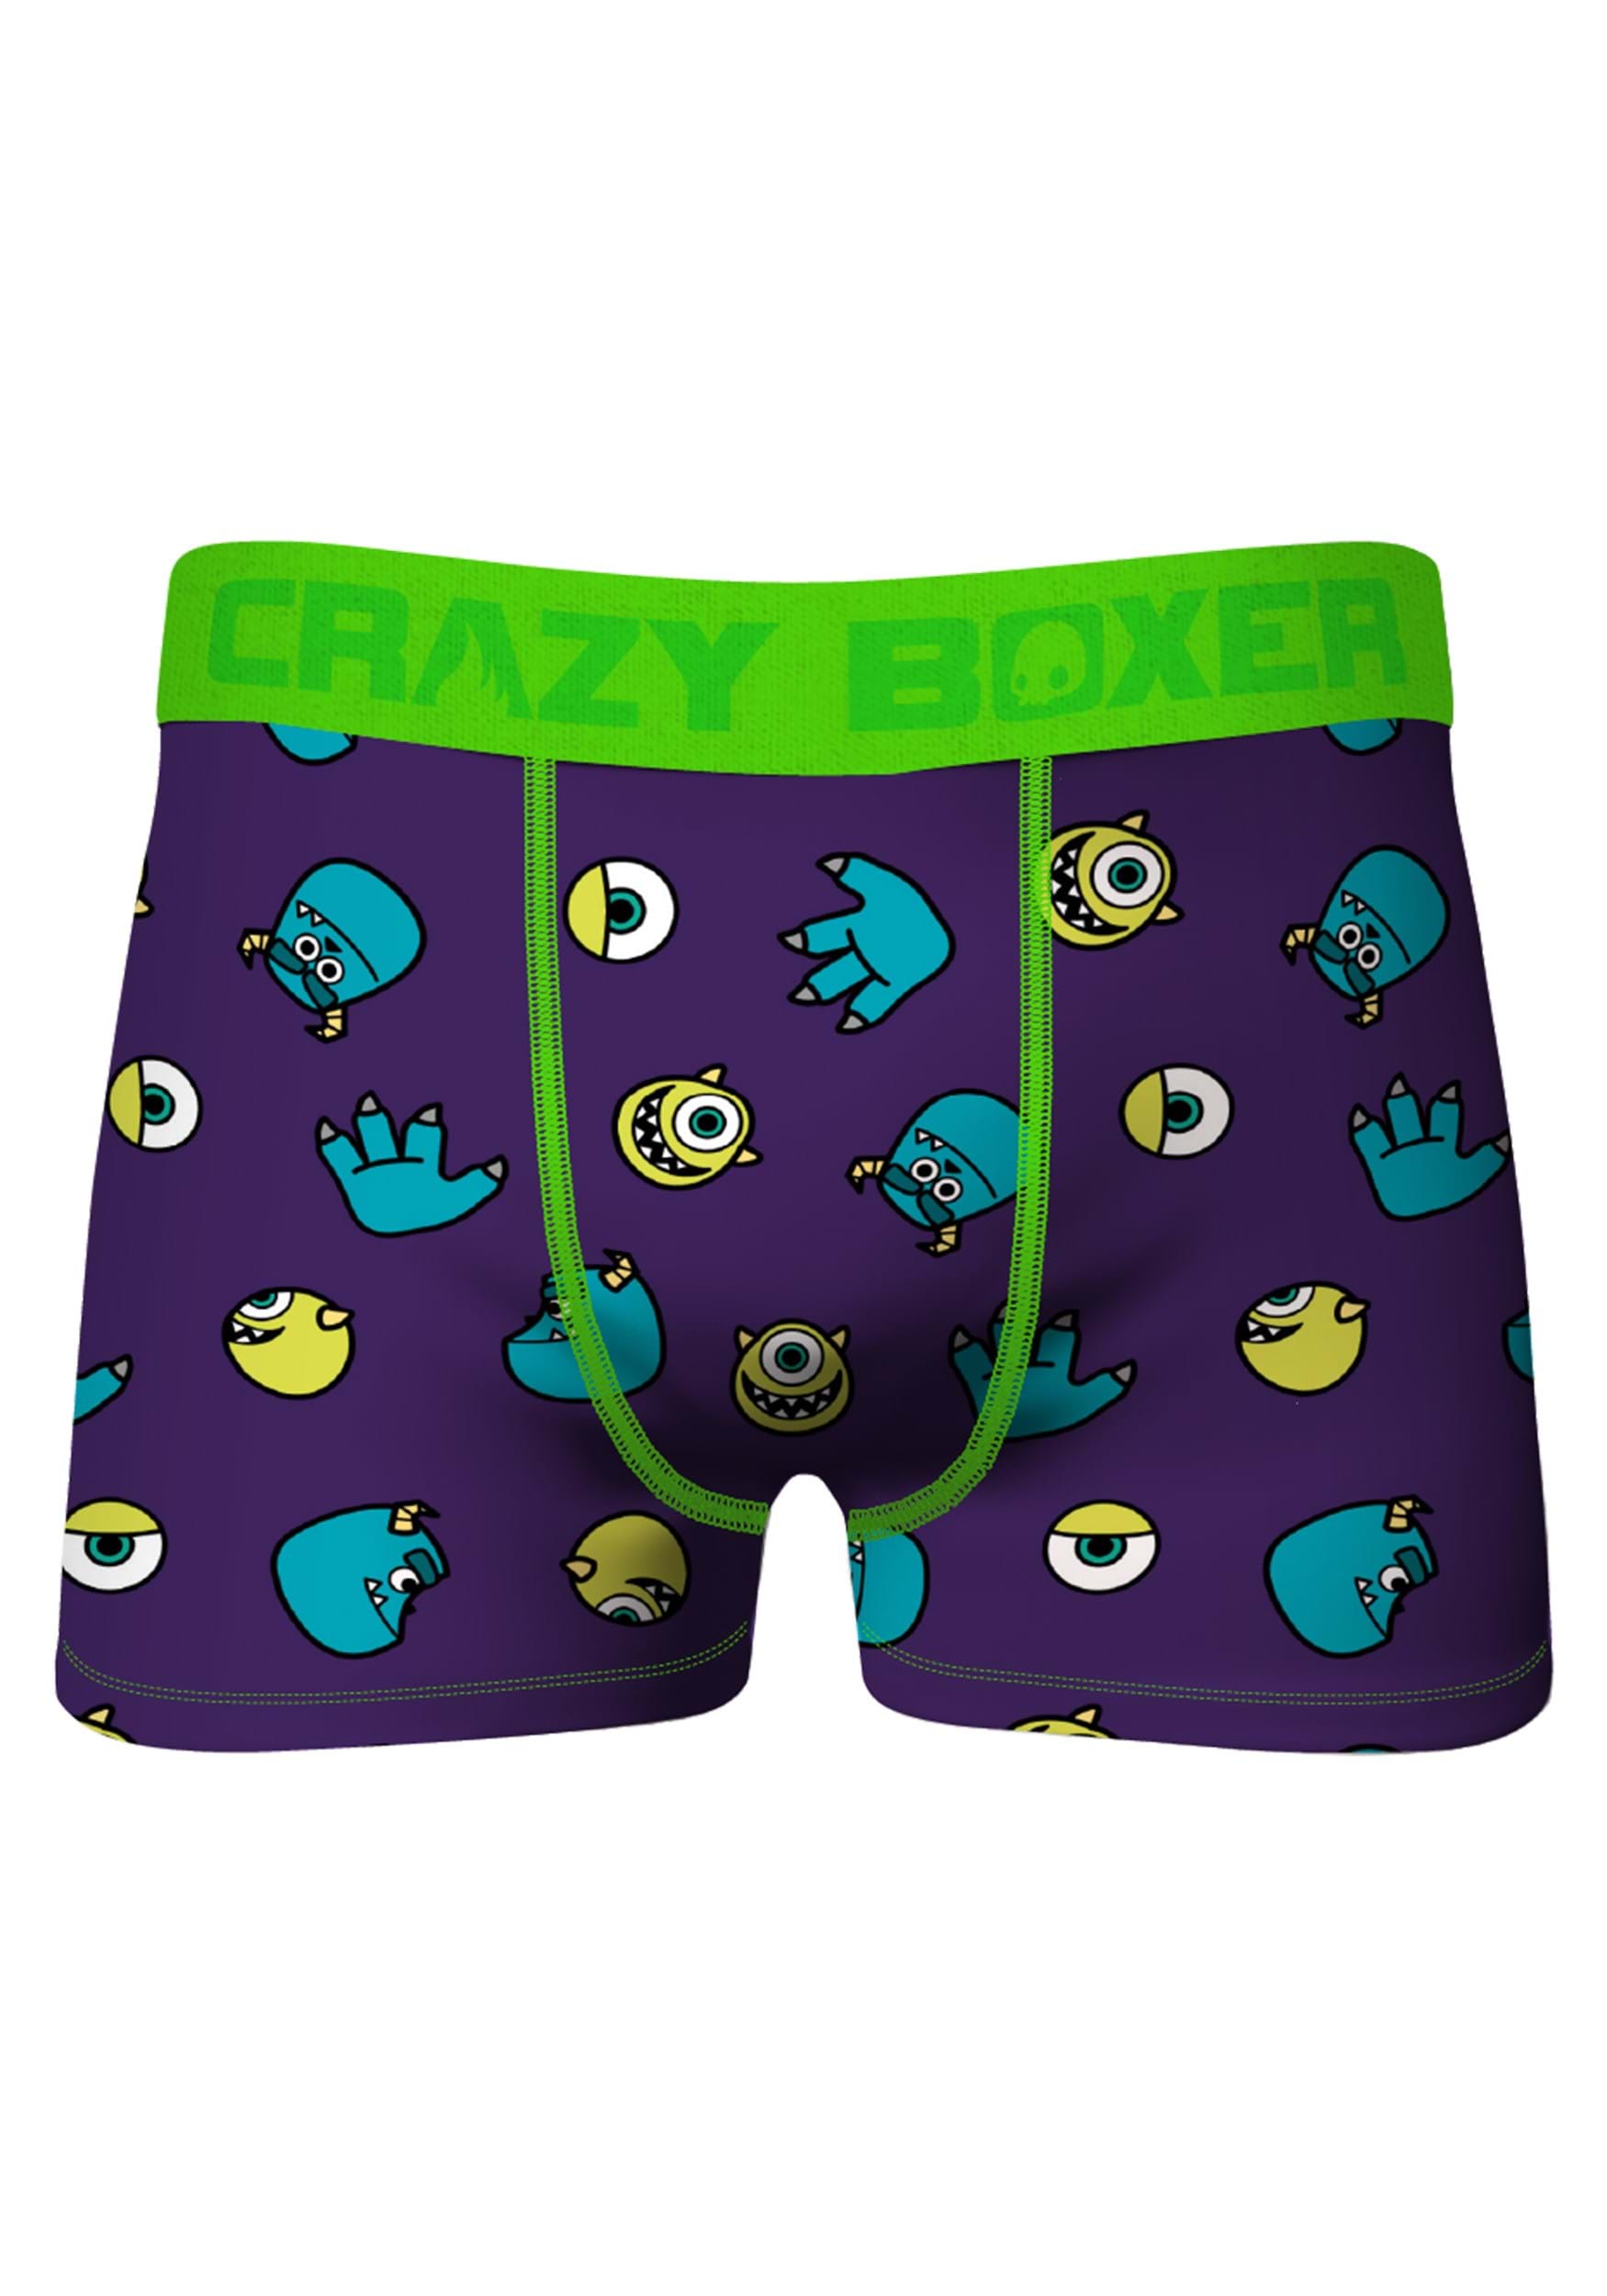 https://images.fun.co.uk/products/74632/1-1/crazy-boxers-mens-disney-monsters-inc-purple-boxer-briefs.jpg